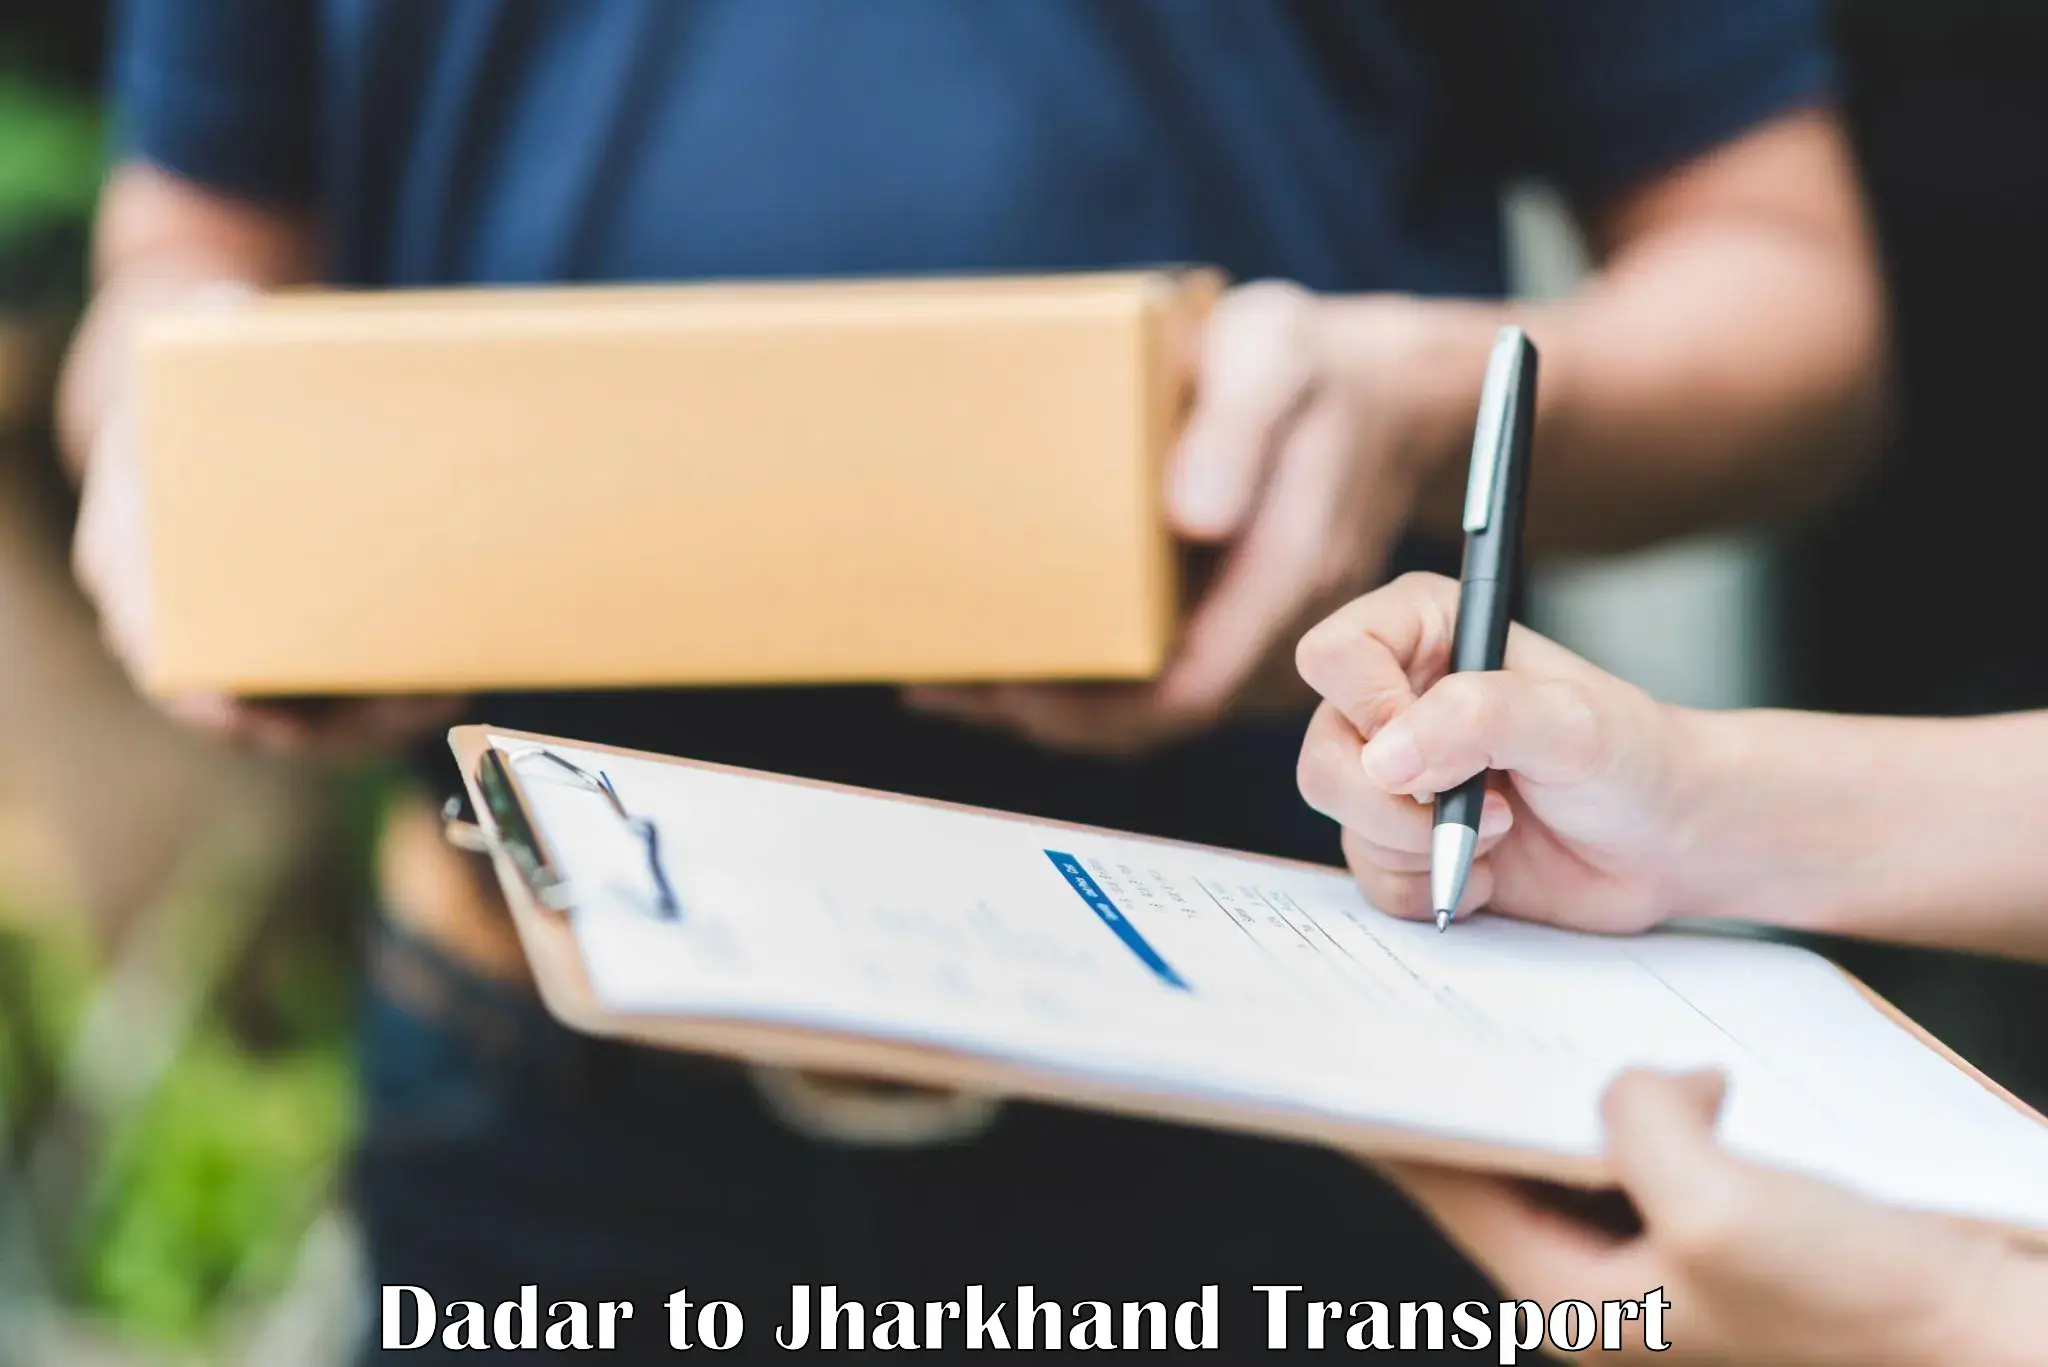 Furniture transport service Dadar to Dhanbad